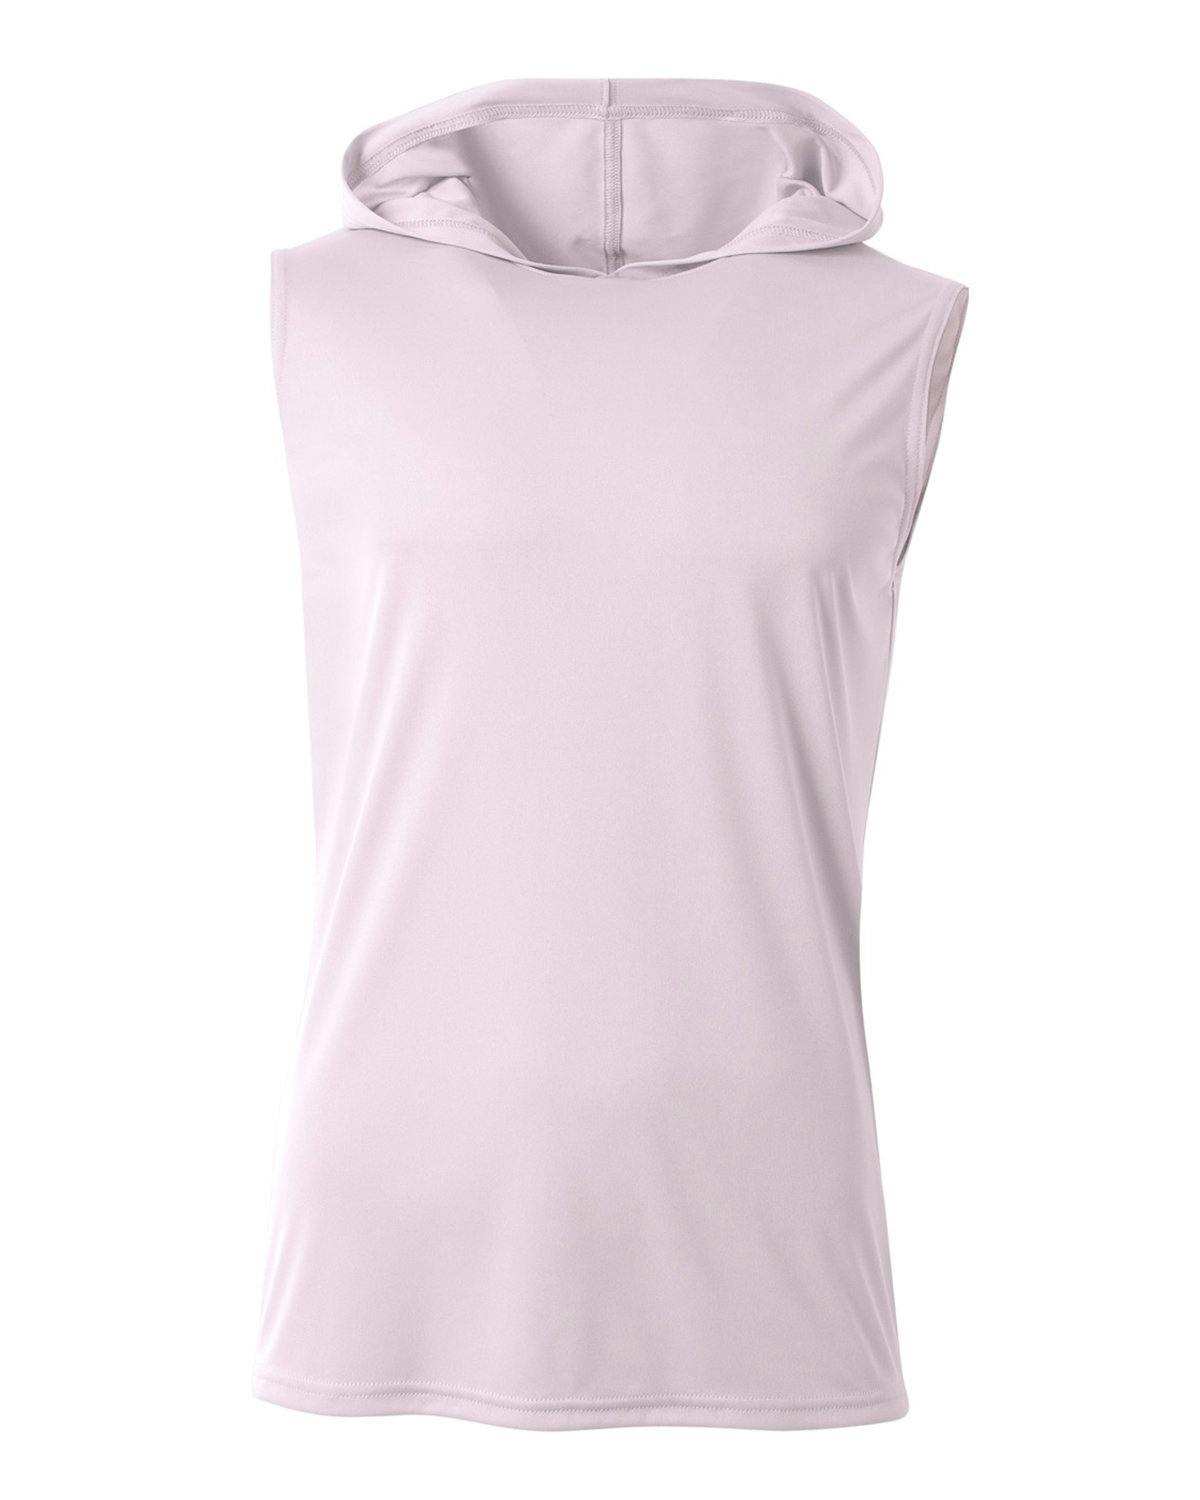 Image for Men's Cooling Performance Sleeveless Hooded T-shirt